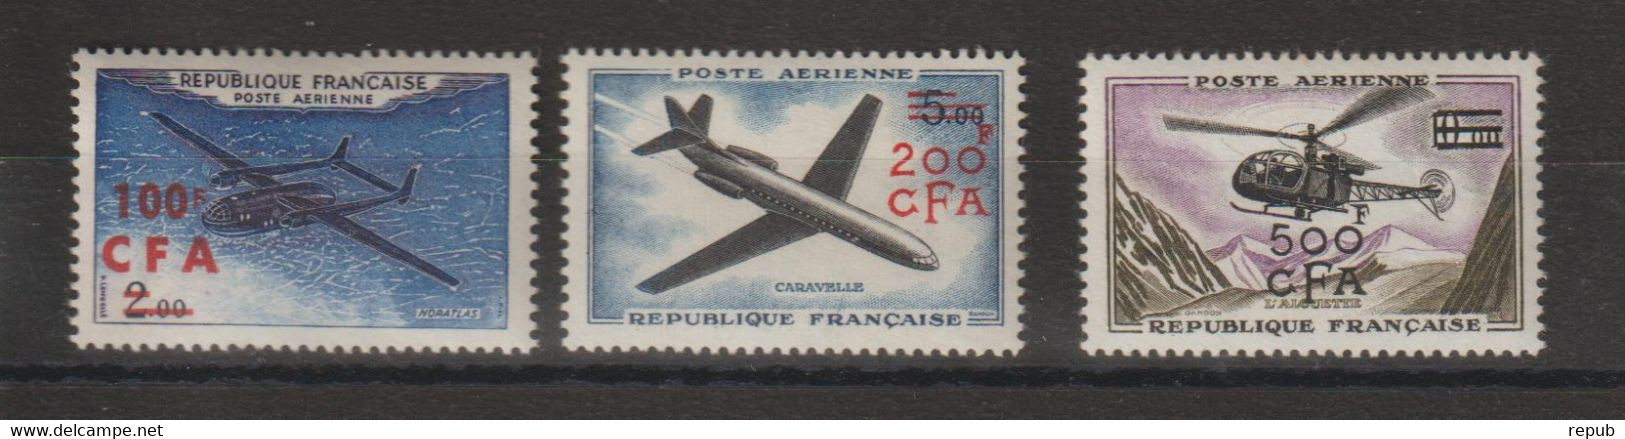 Réunion 1961 Prototypes PA 58-60 3 Val ** MNH - Airmail